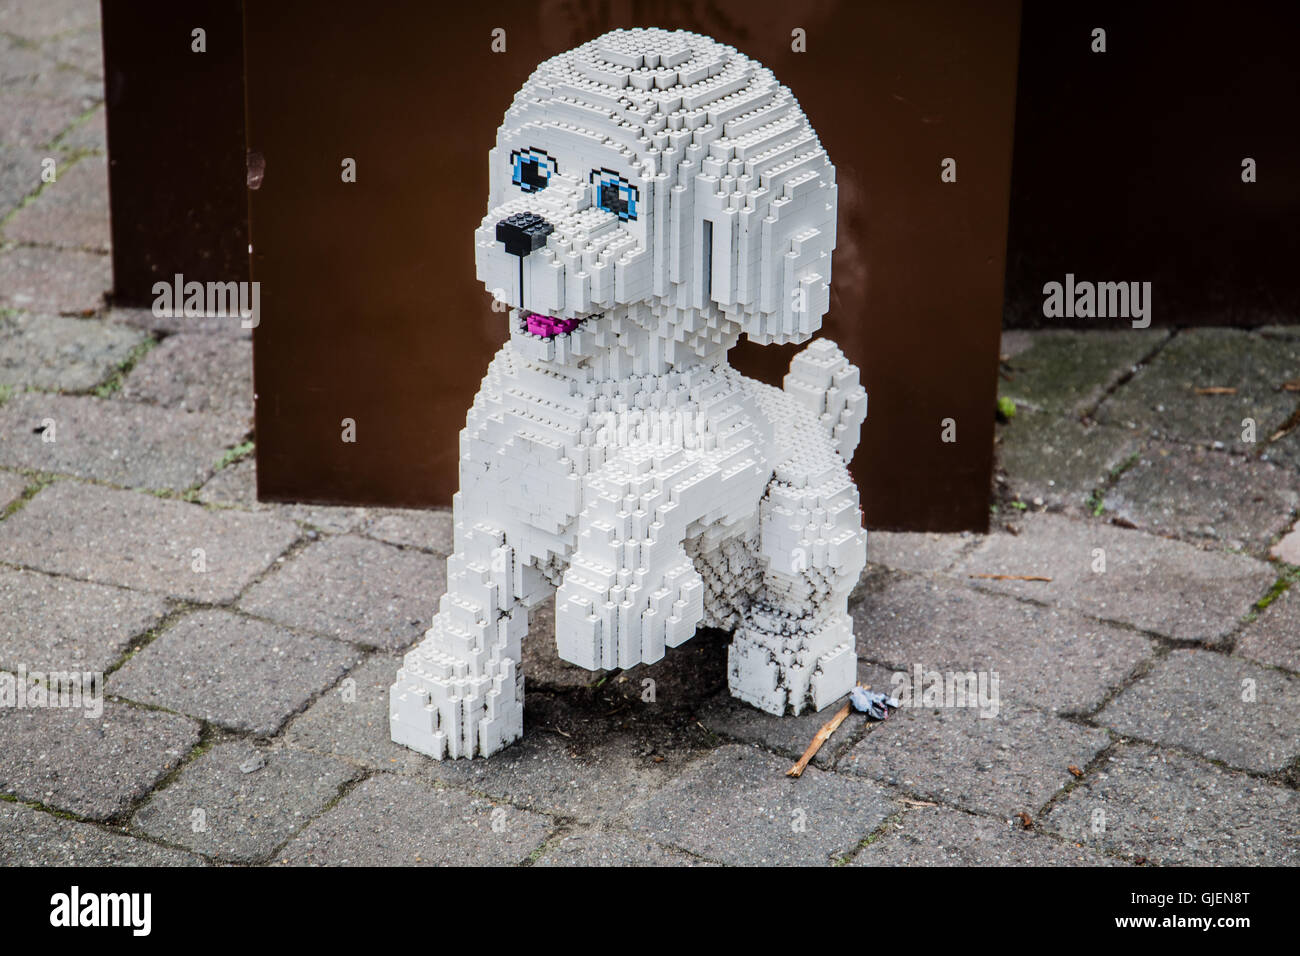 Hund Figur Legoland Windsor - Alamy